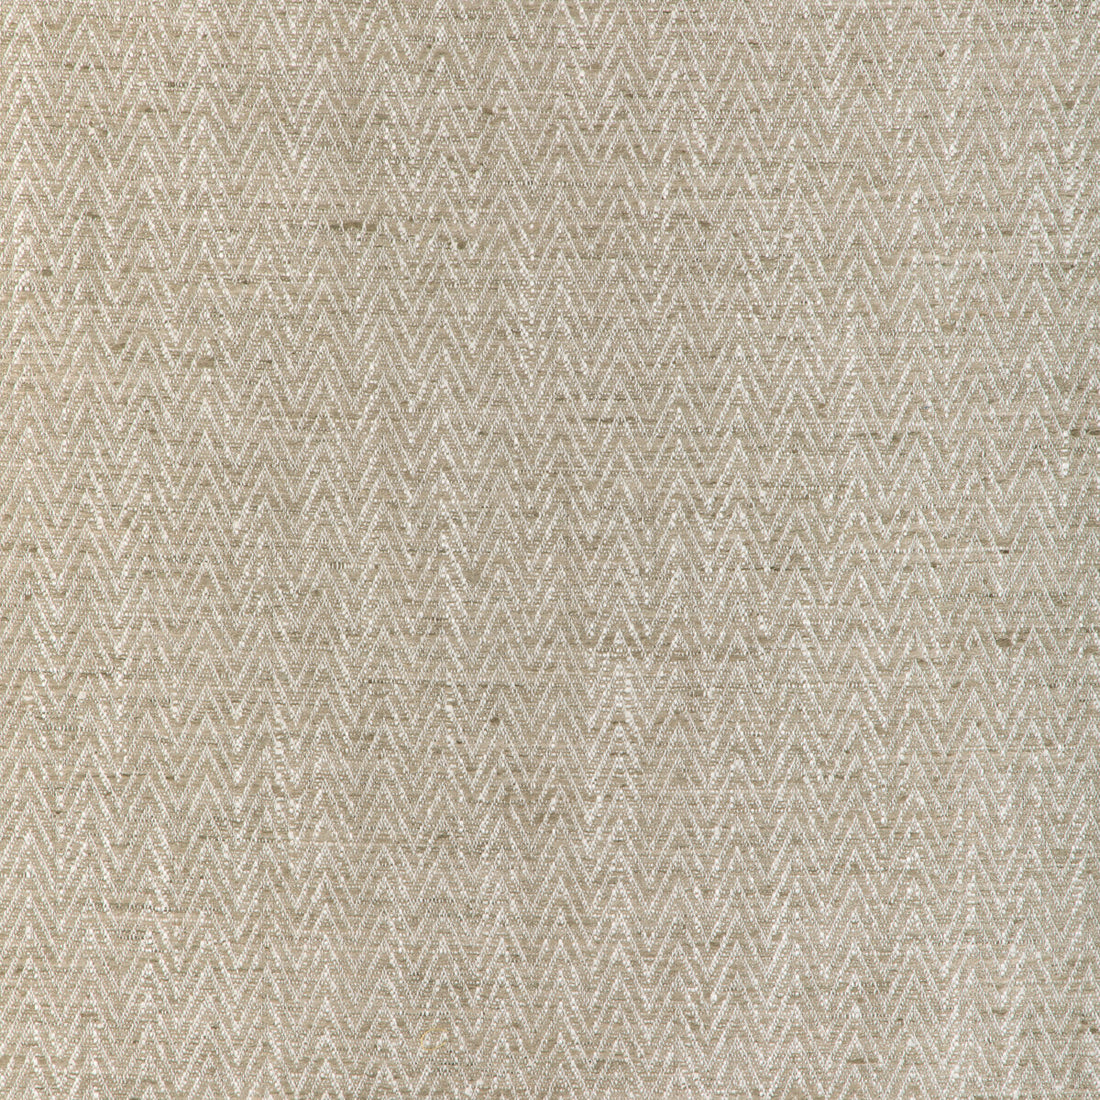 Kravet Smart fabric in 34092-1101 color - pattern 34092.1101.0 - by Kravet Smart